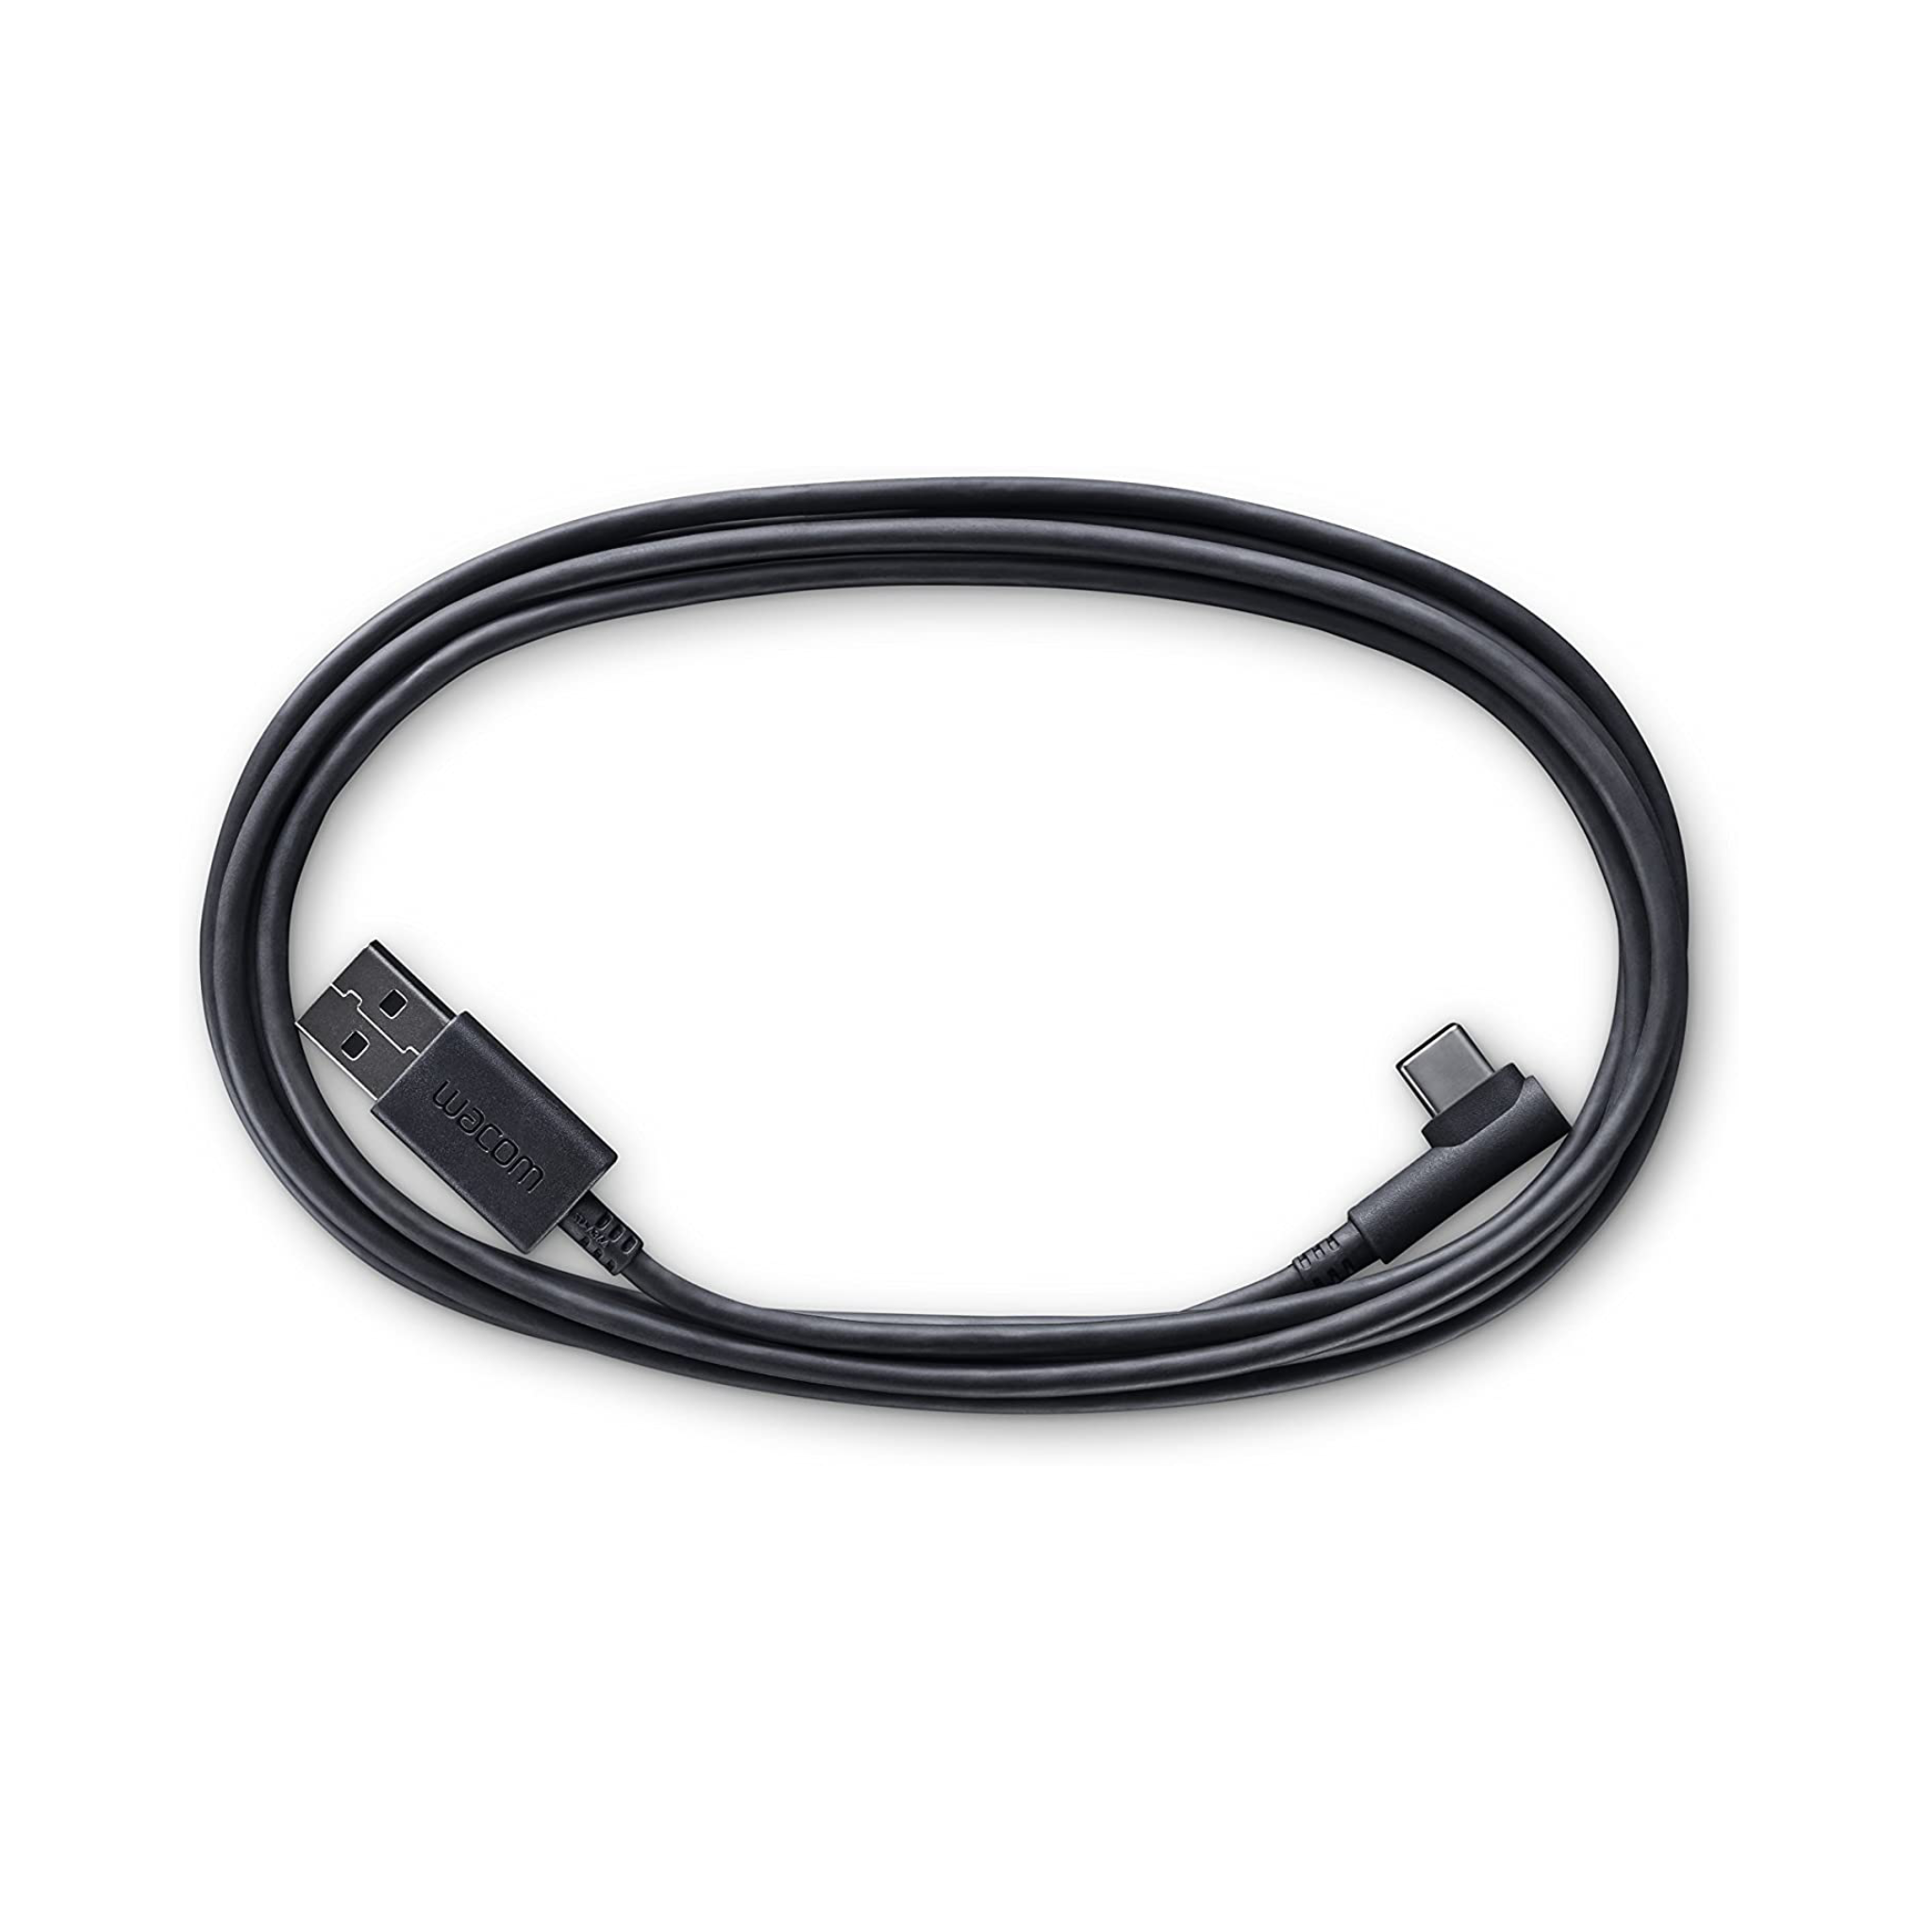 Wacom (2m) USB Cable (Black) for Wacom Intuos Pro Devices